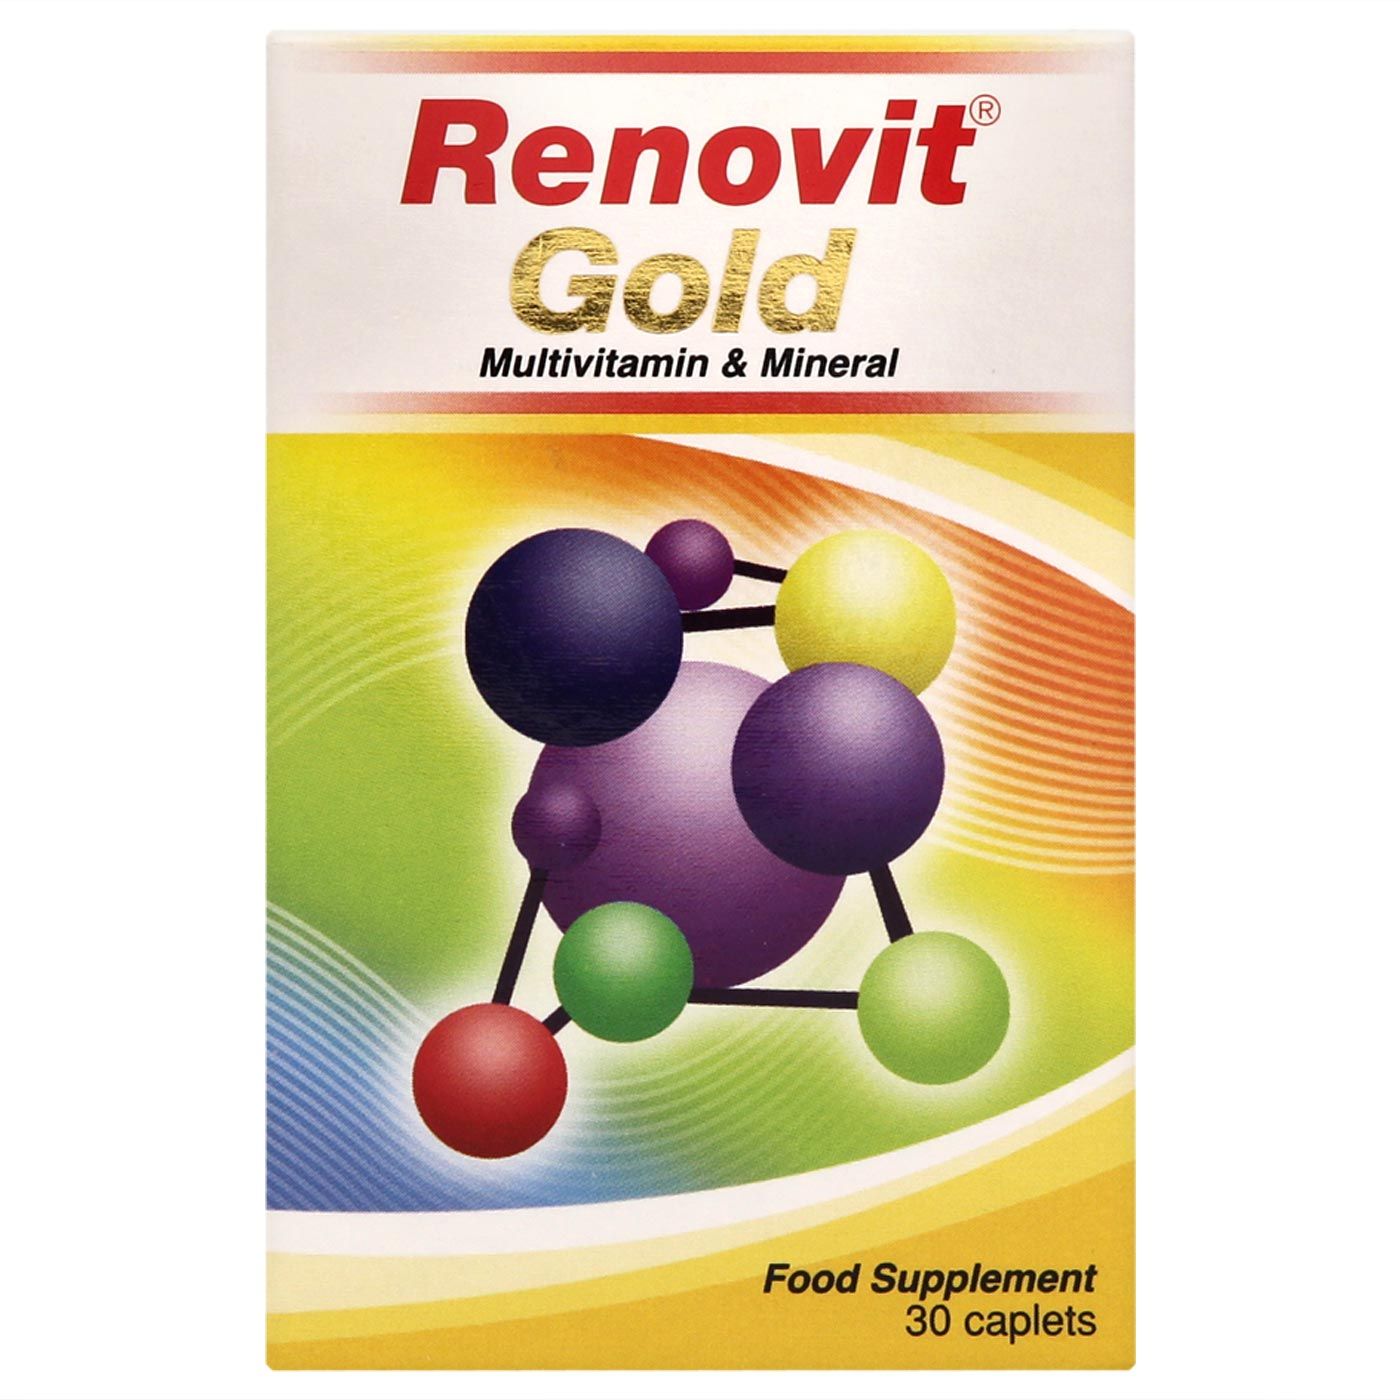 Renovit Gold Multivitamin & Mineral 30's - 6